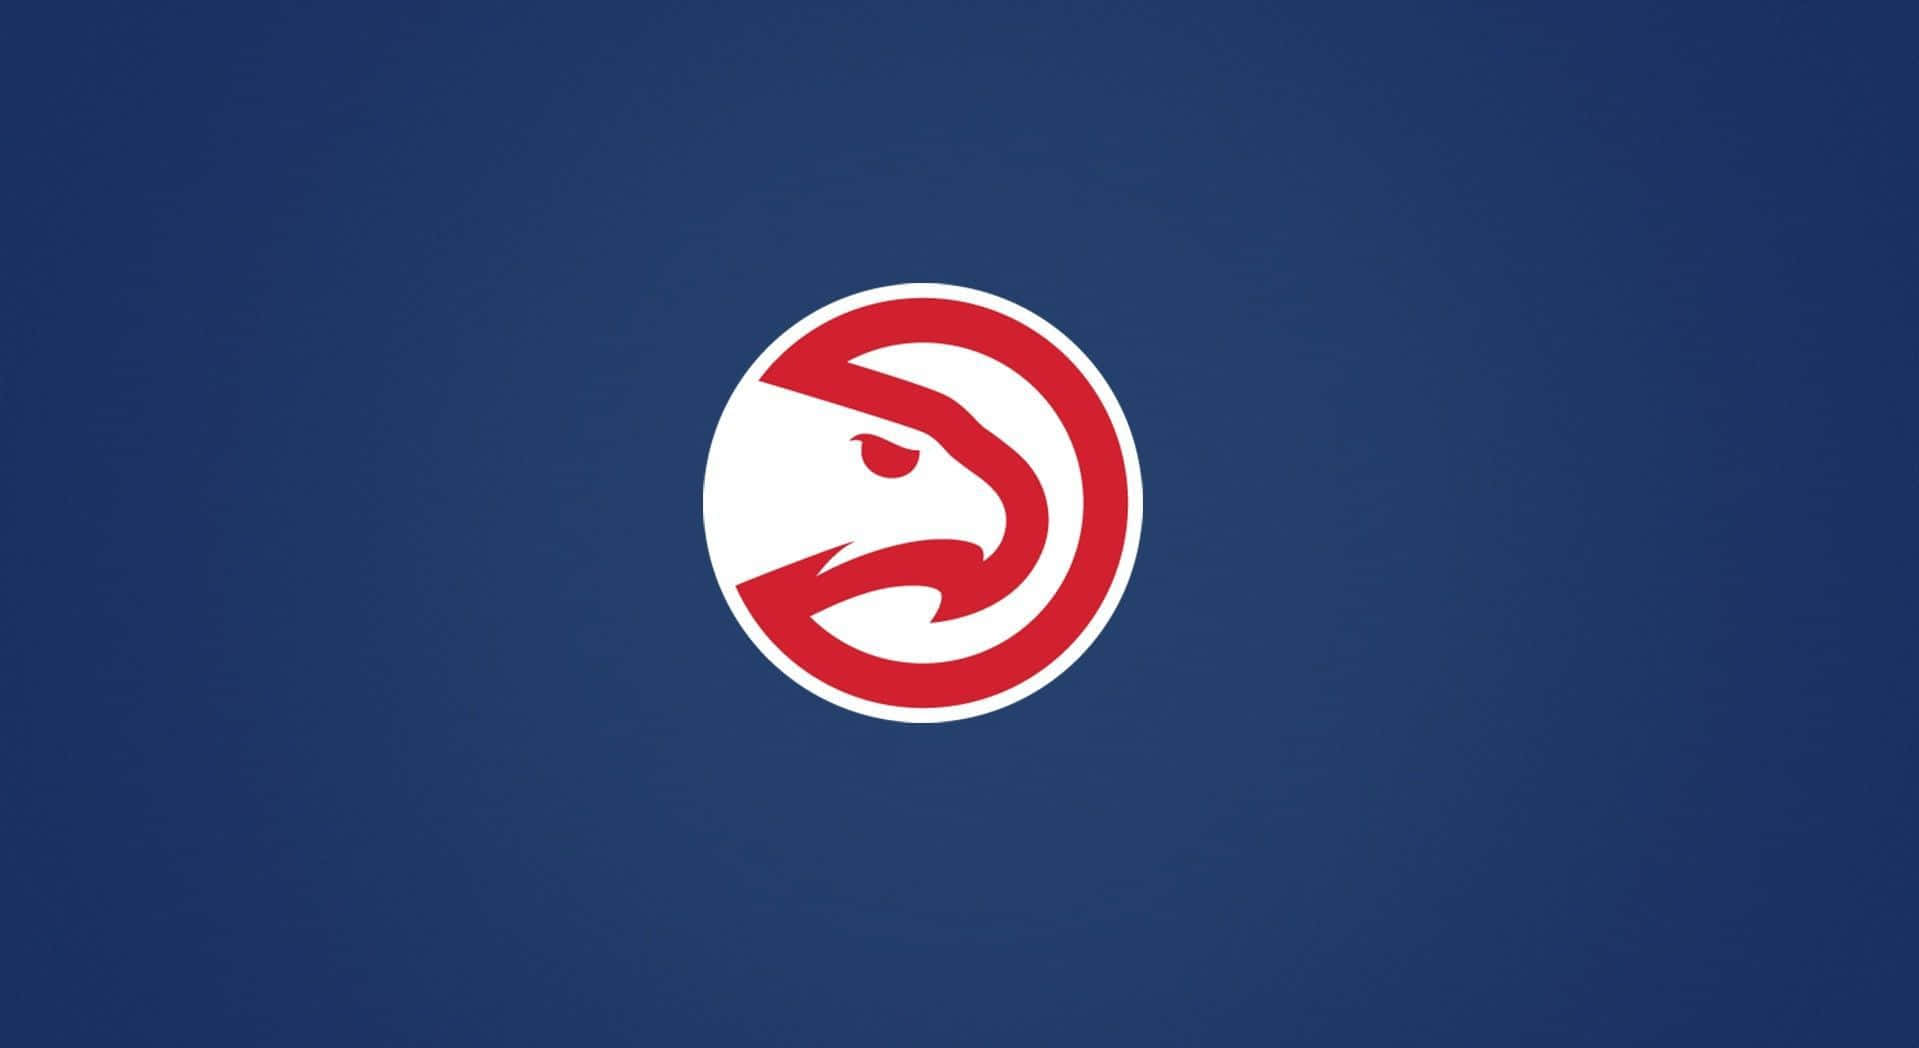 Atlanta Hawks take flight for a successful basketball season